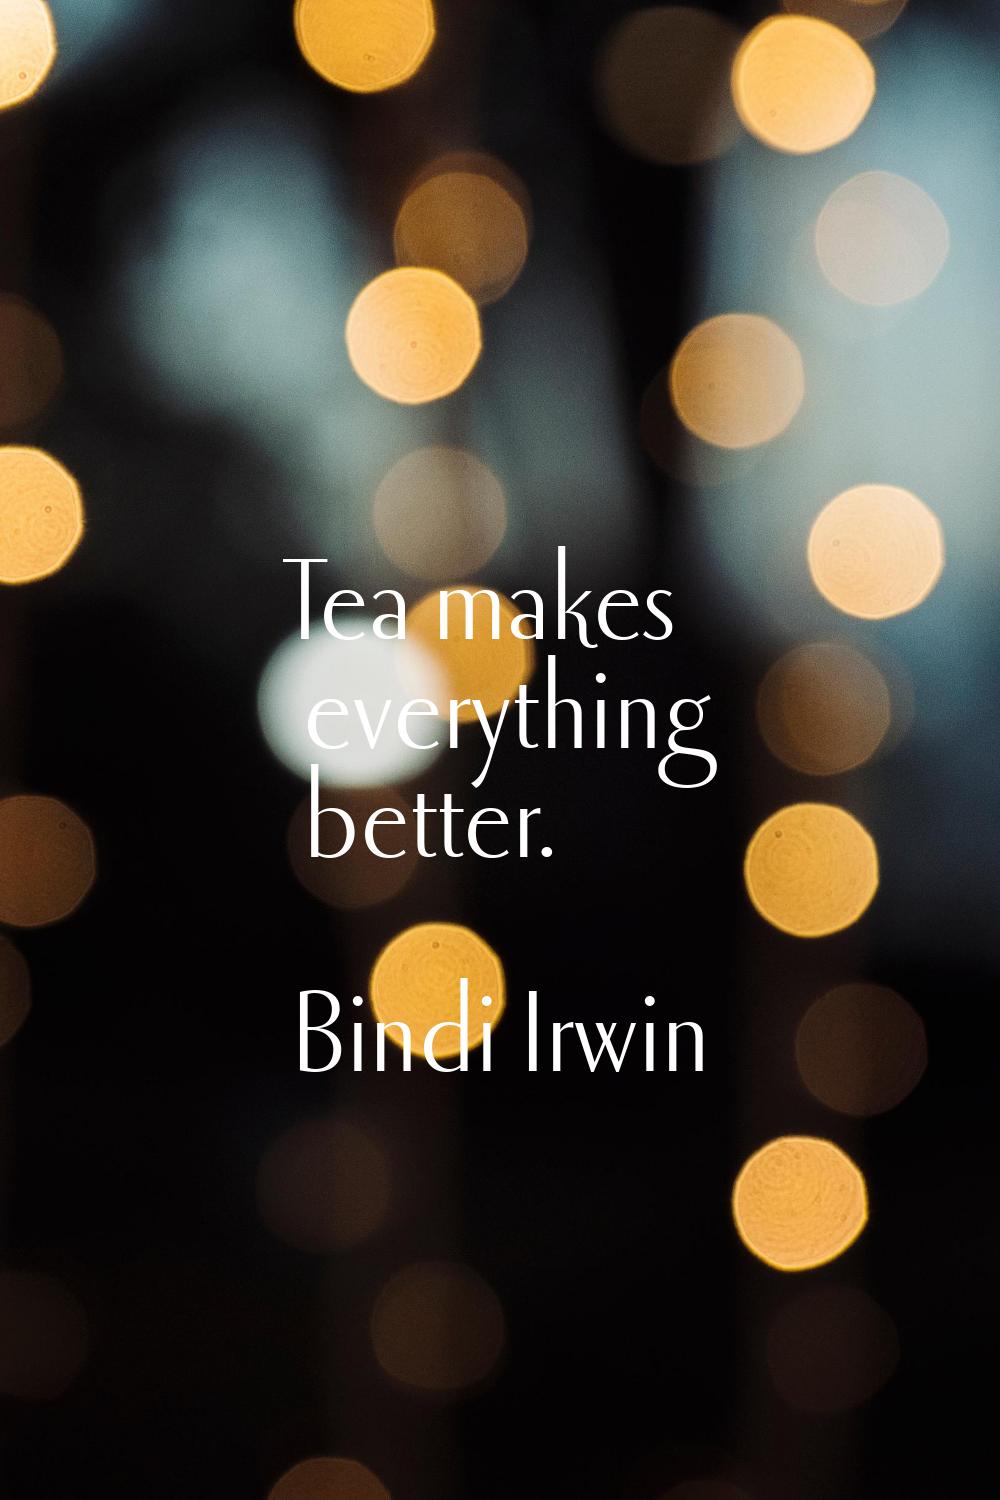 Tea makes everything better.